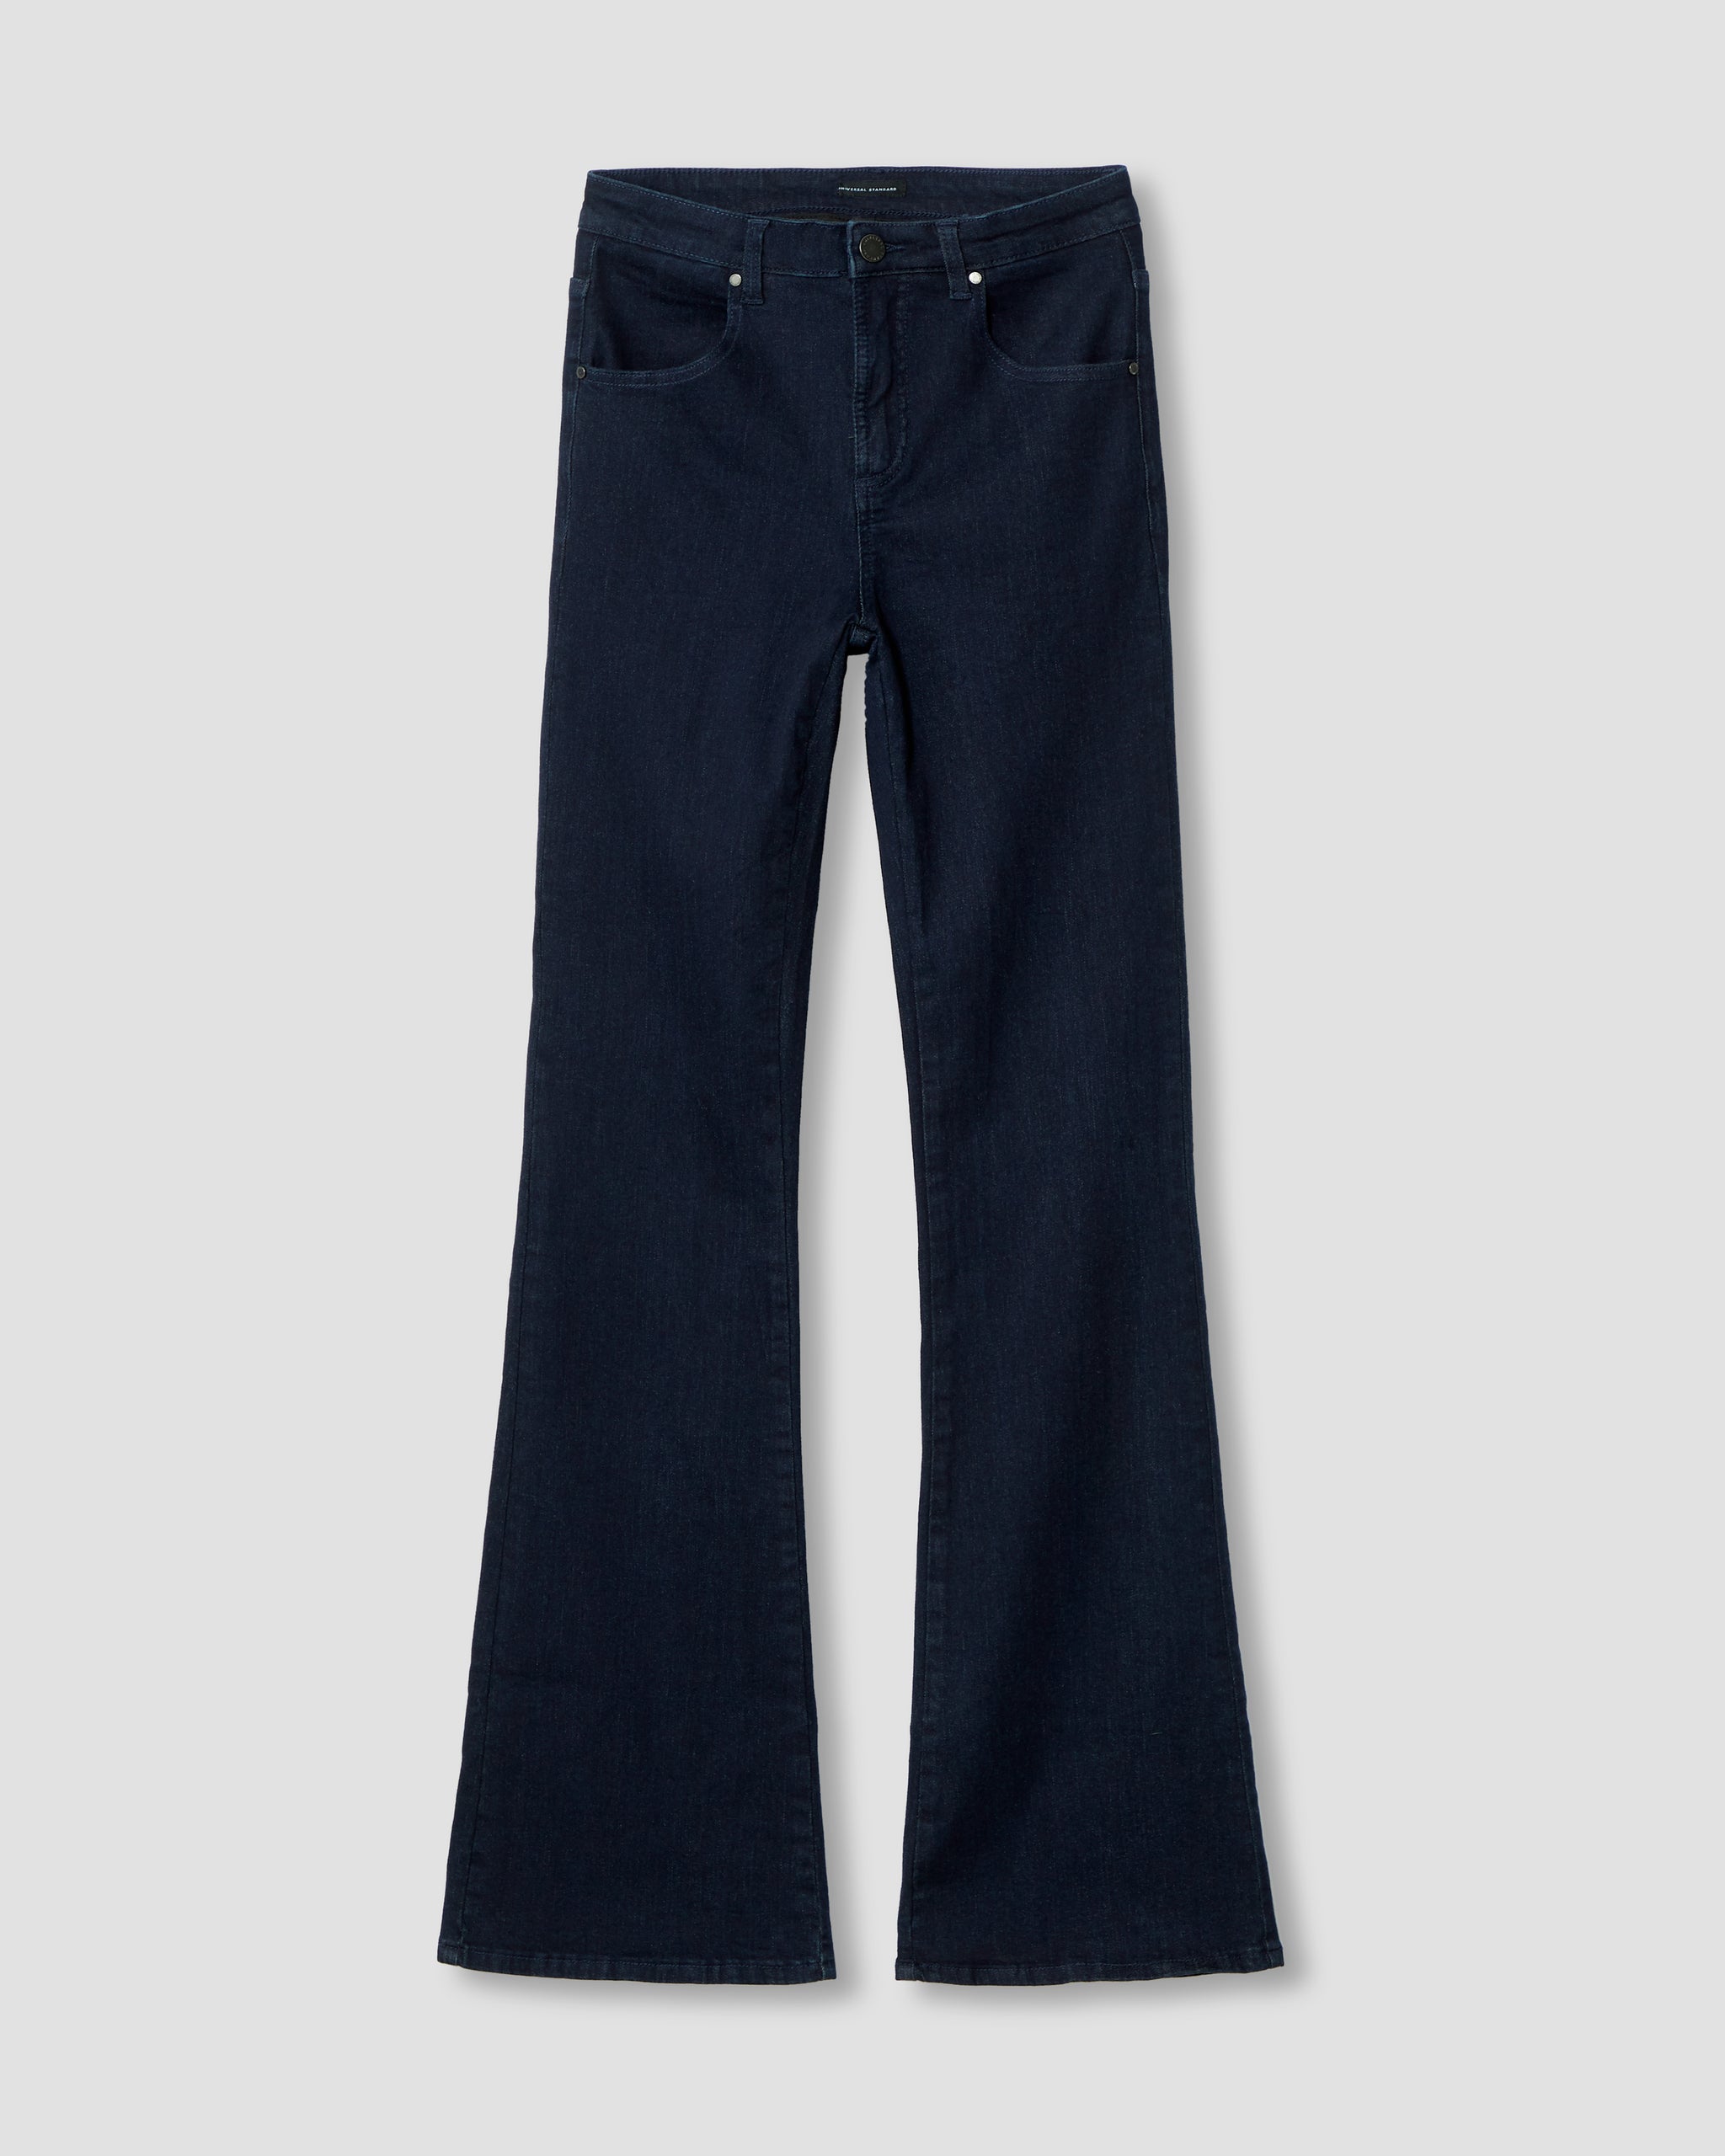 Sava High Rise Flare Jeans 34 Inch - Dark Indigo